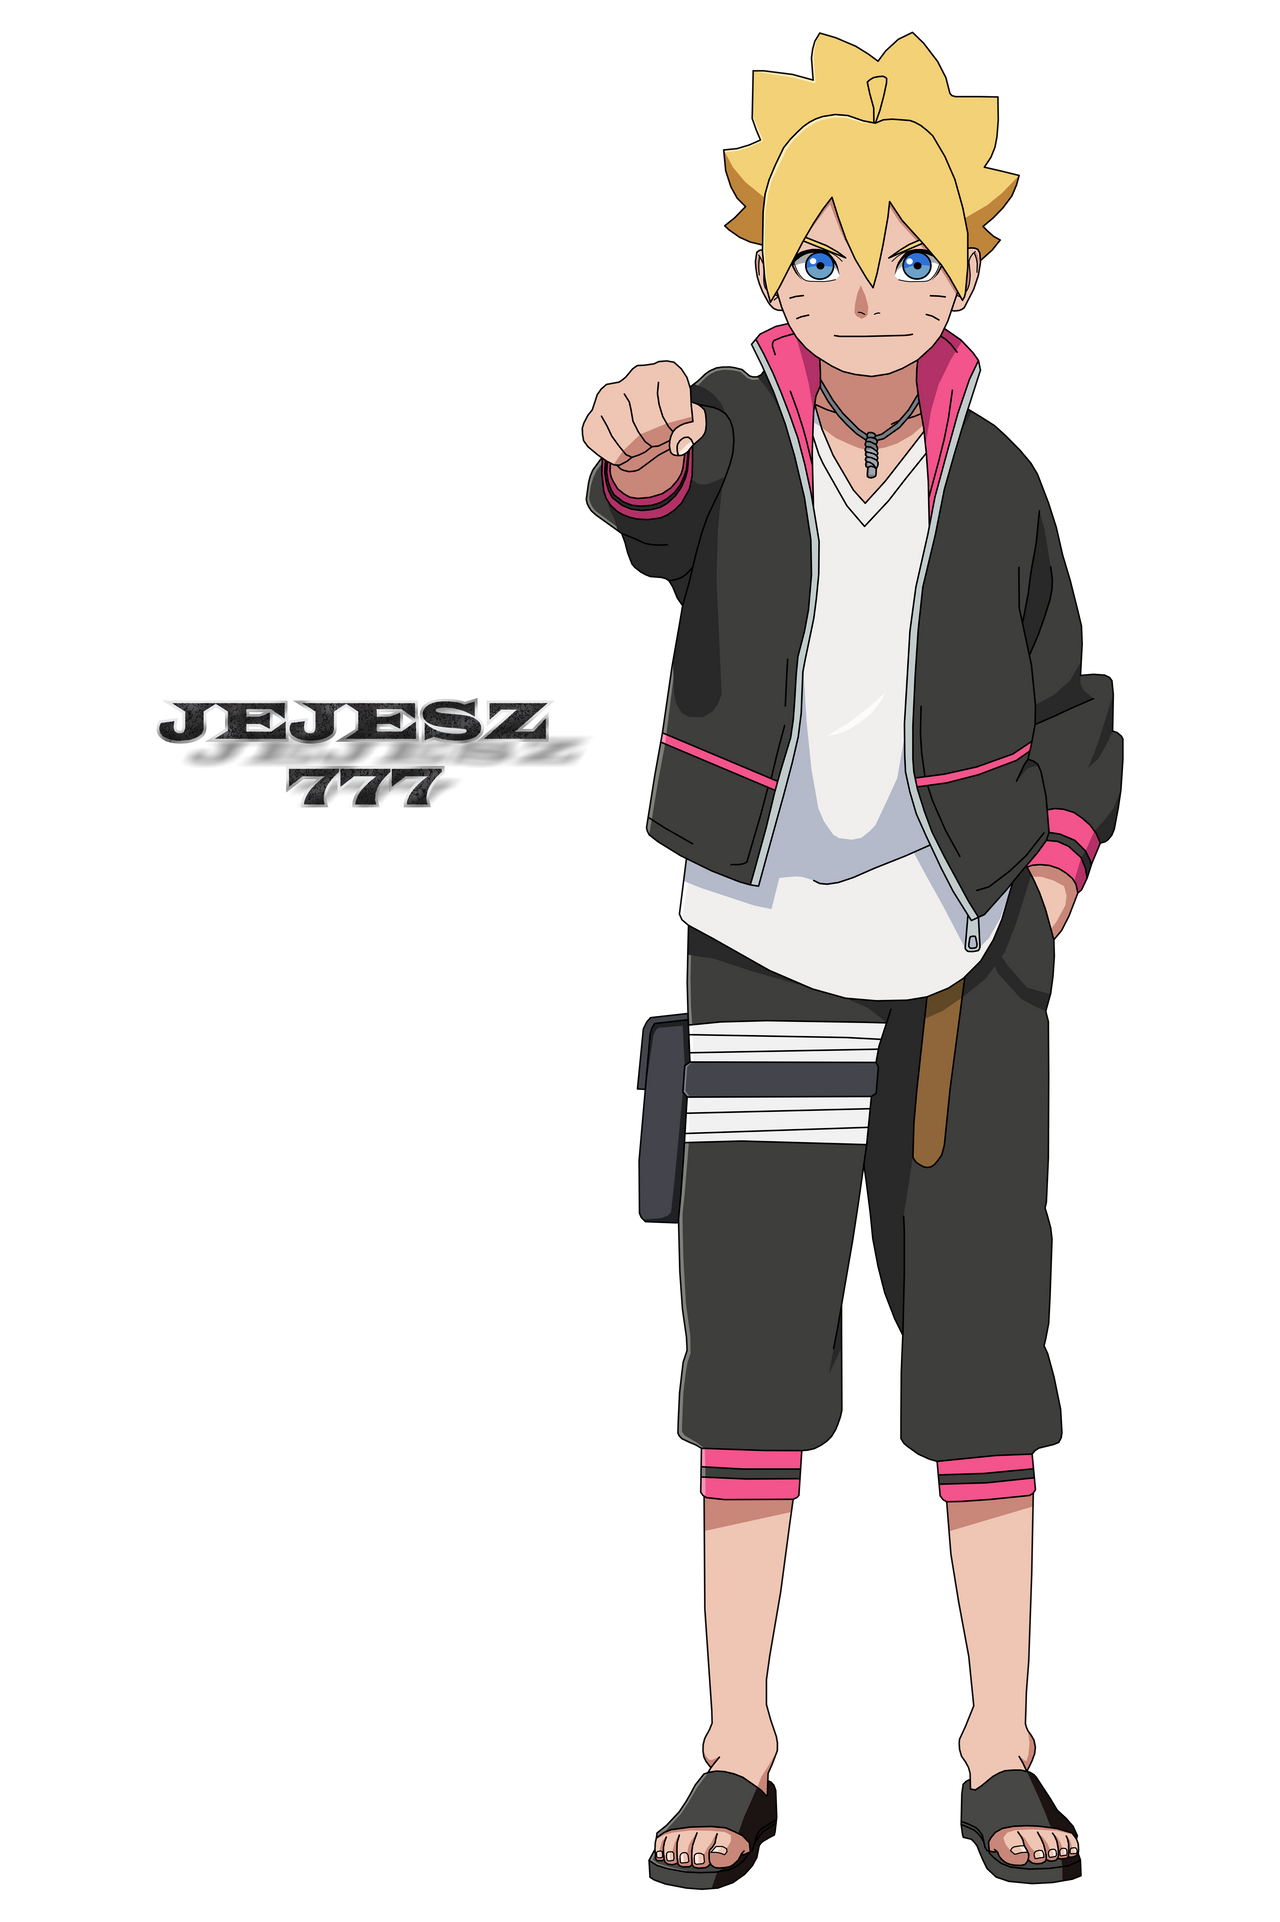 Boruto: Naruto Next Generations|Boruto Uzumaki by JEJESZ777 on DeviantArt